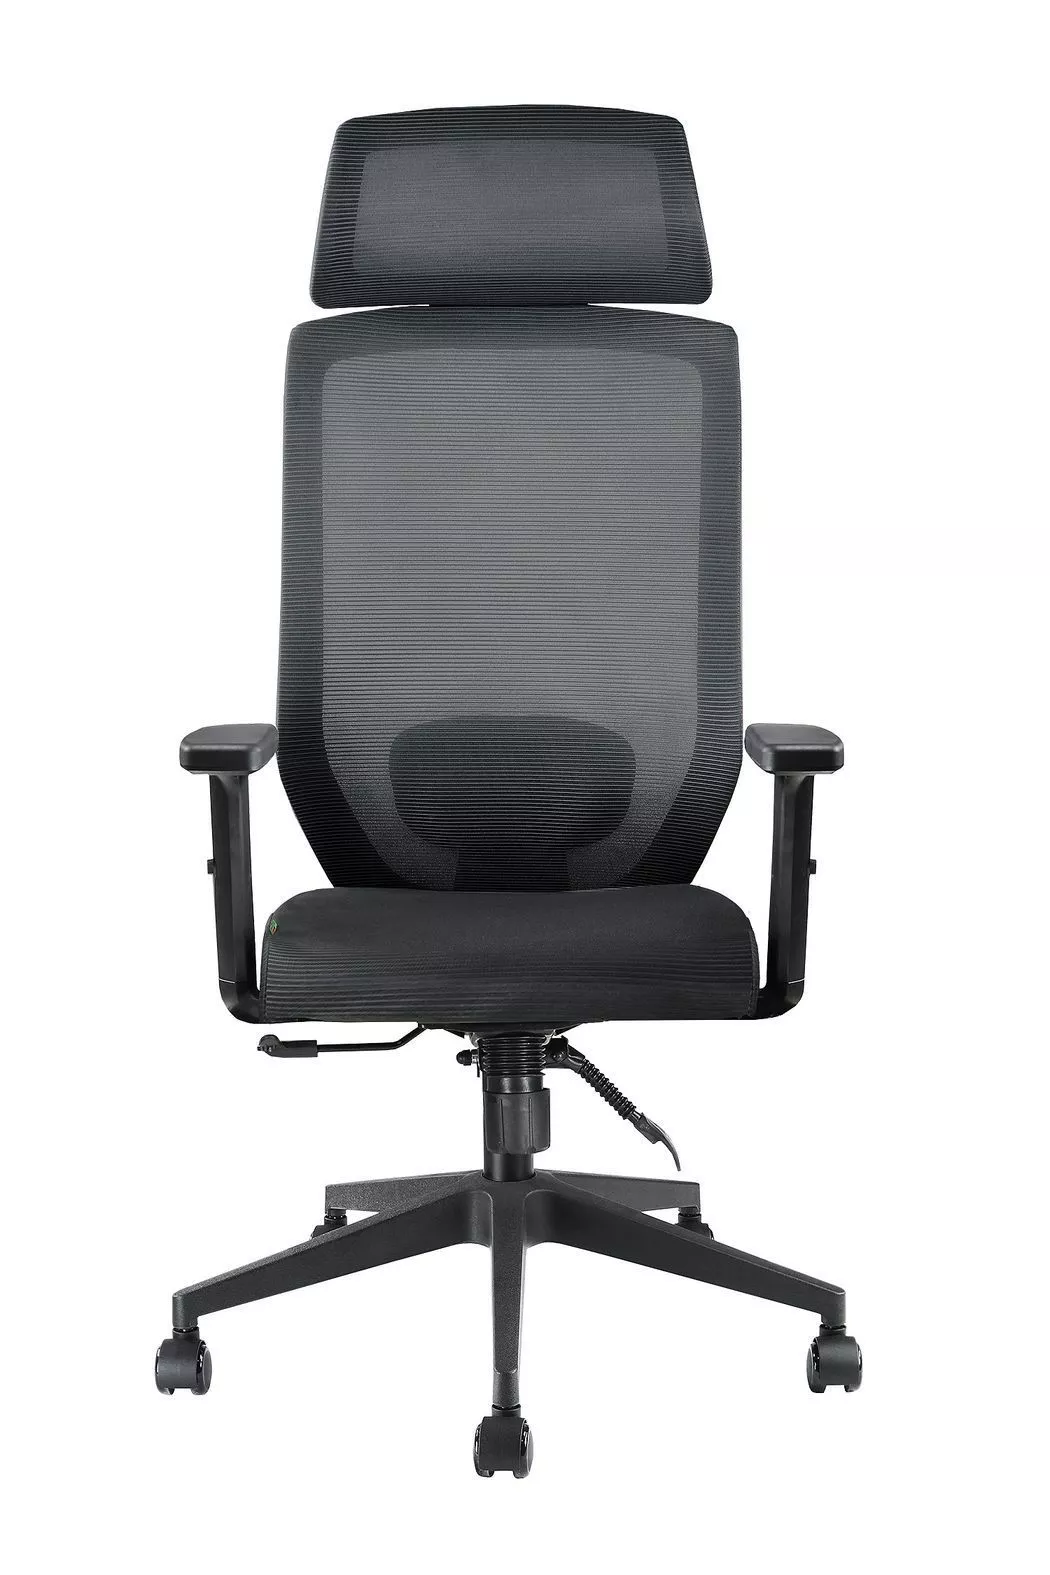 Кресло для персонала Riva Chair А755 черный